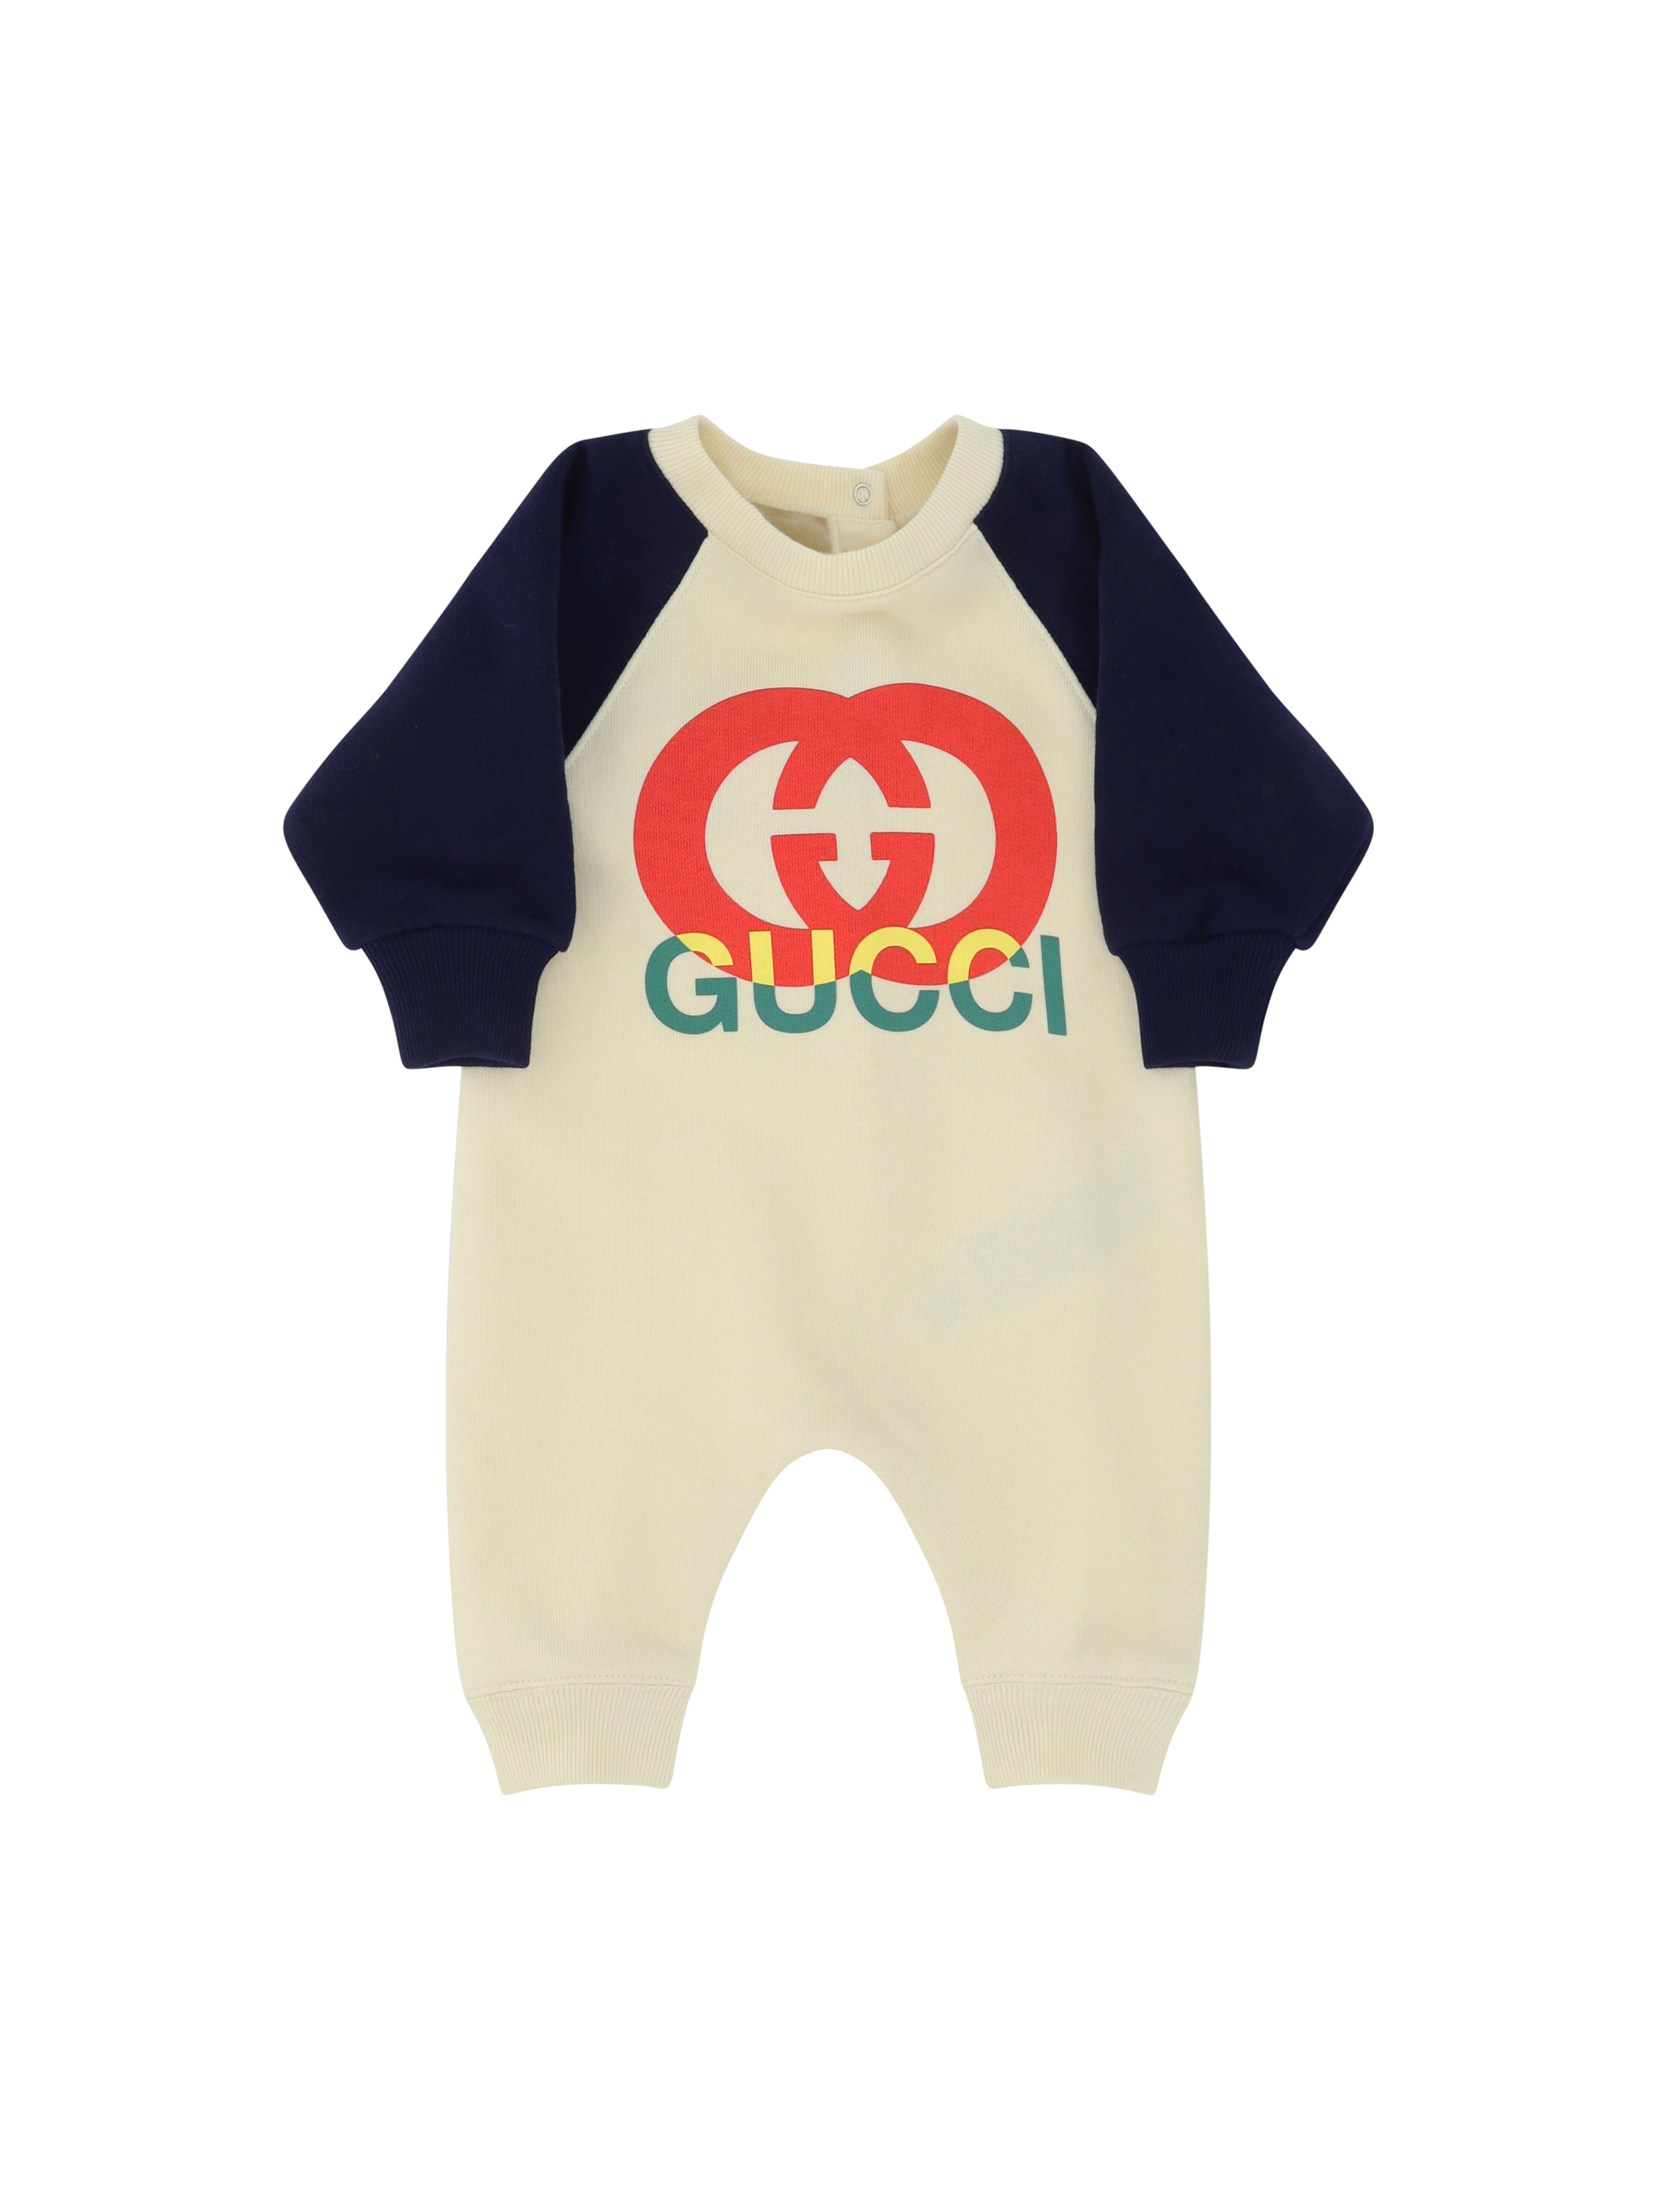 gucci - onesies for newborn